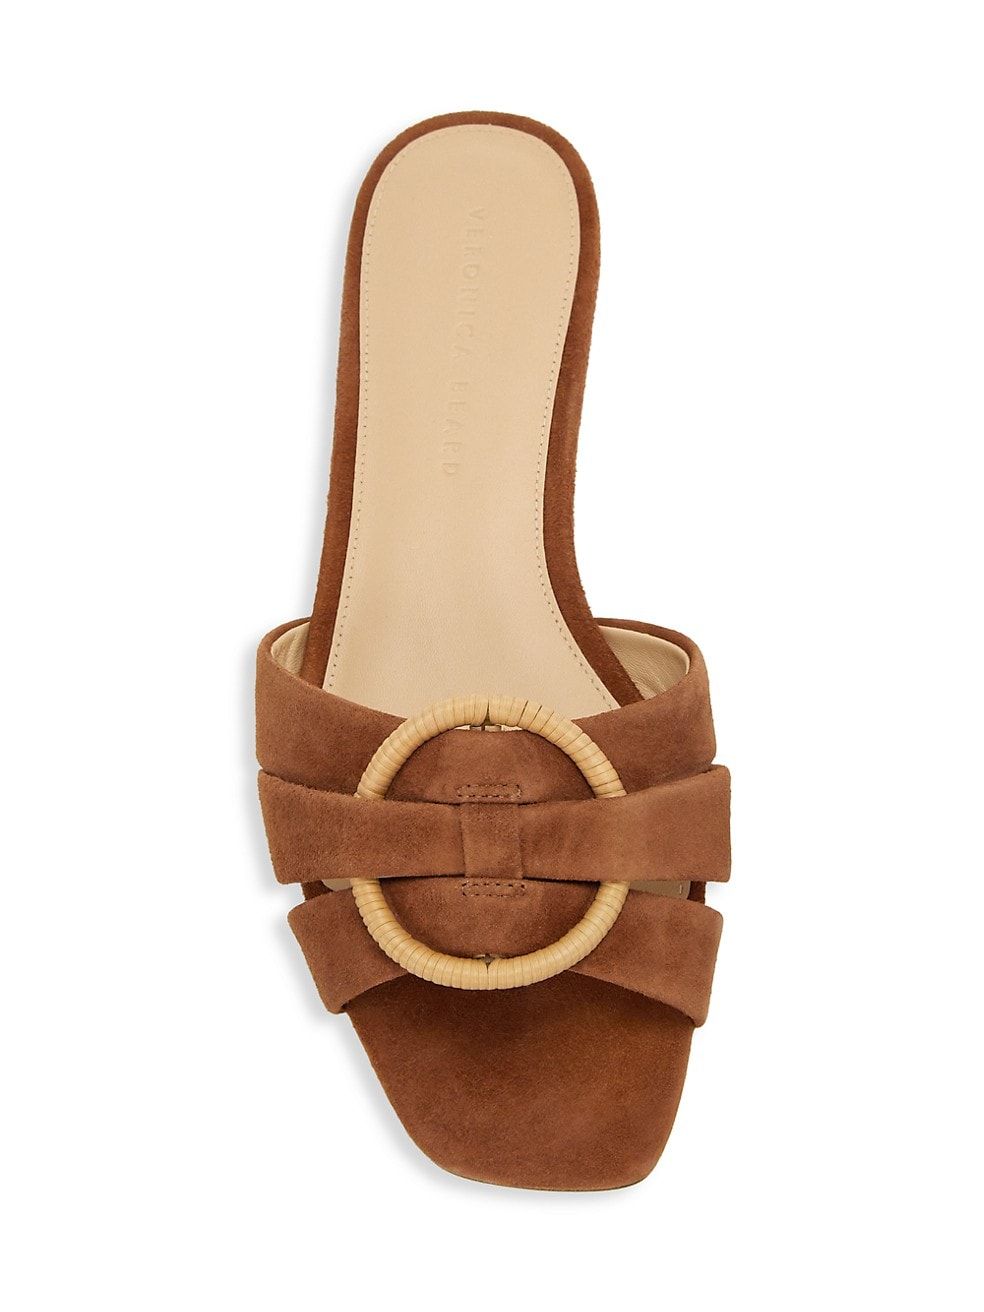 Veronica Beard Madeira Suede Sandals | Saks Fifth Avenue